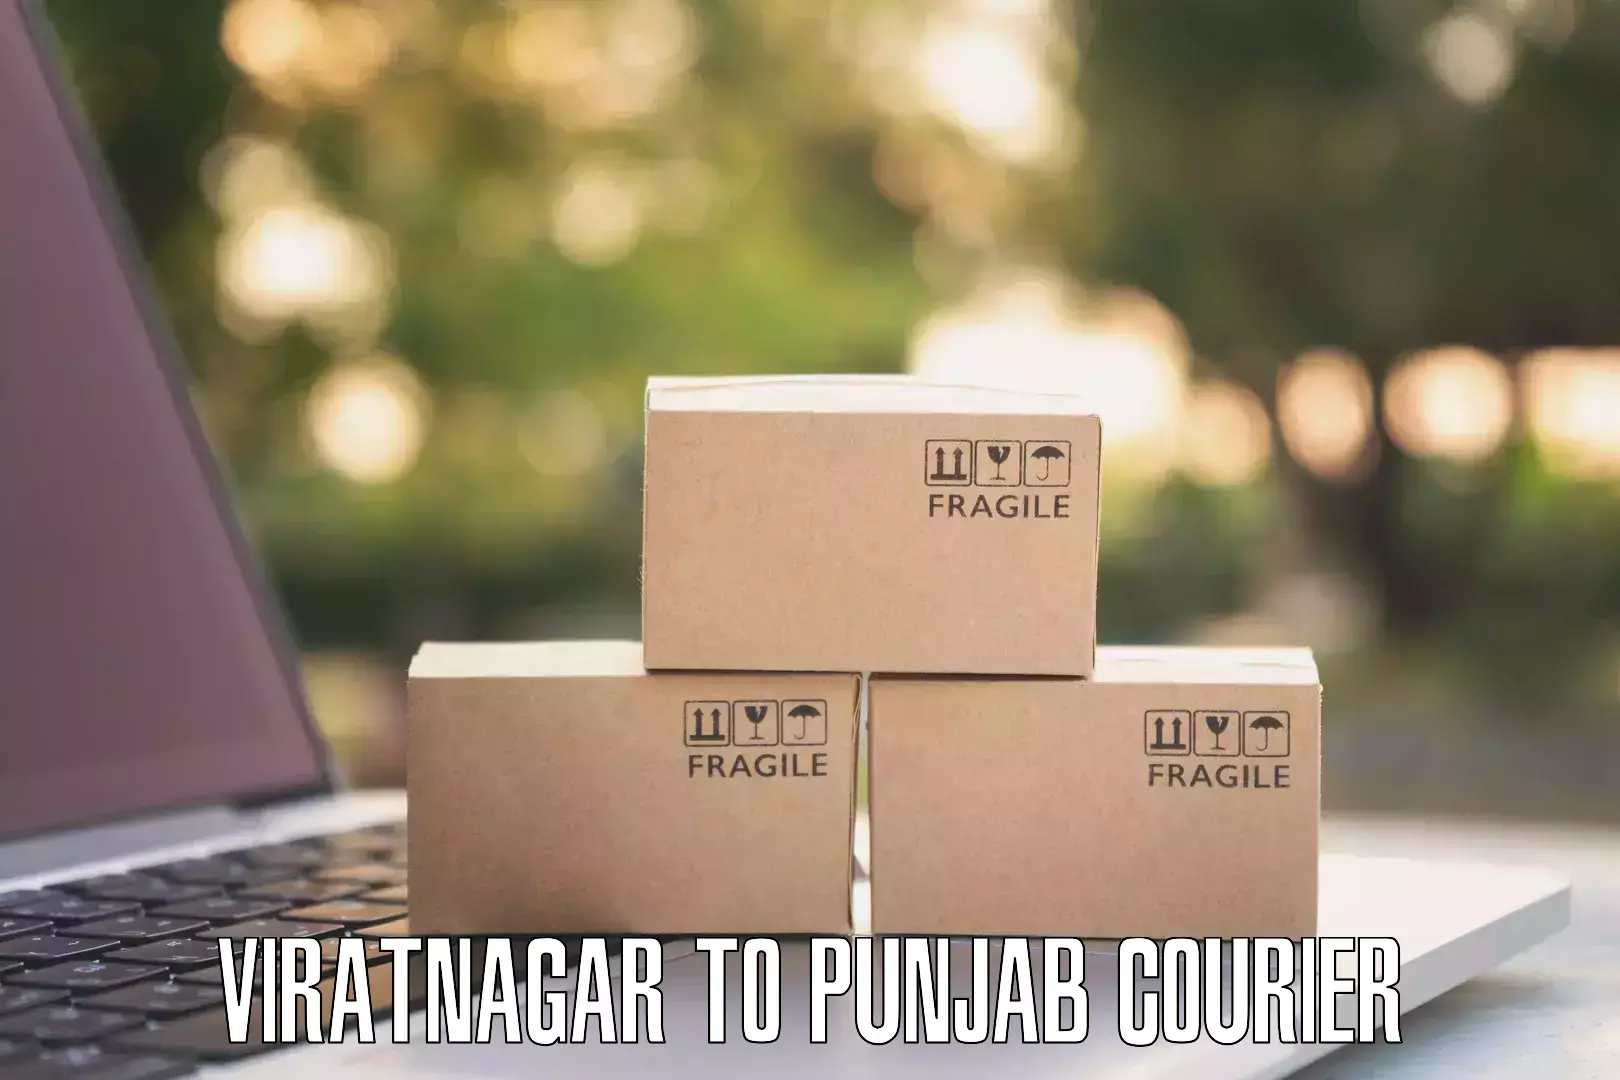 Next-day delivery options in Viratnagar to Zirakpur